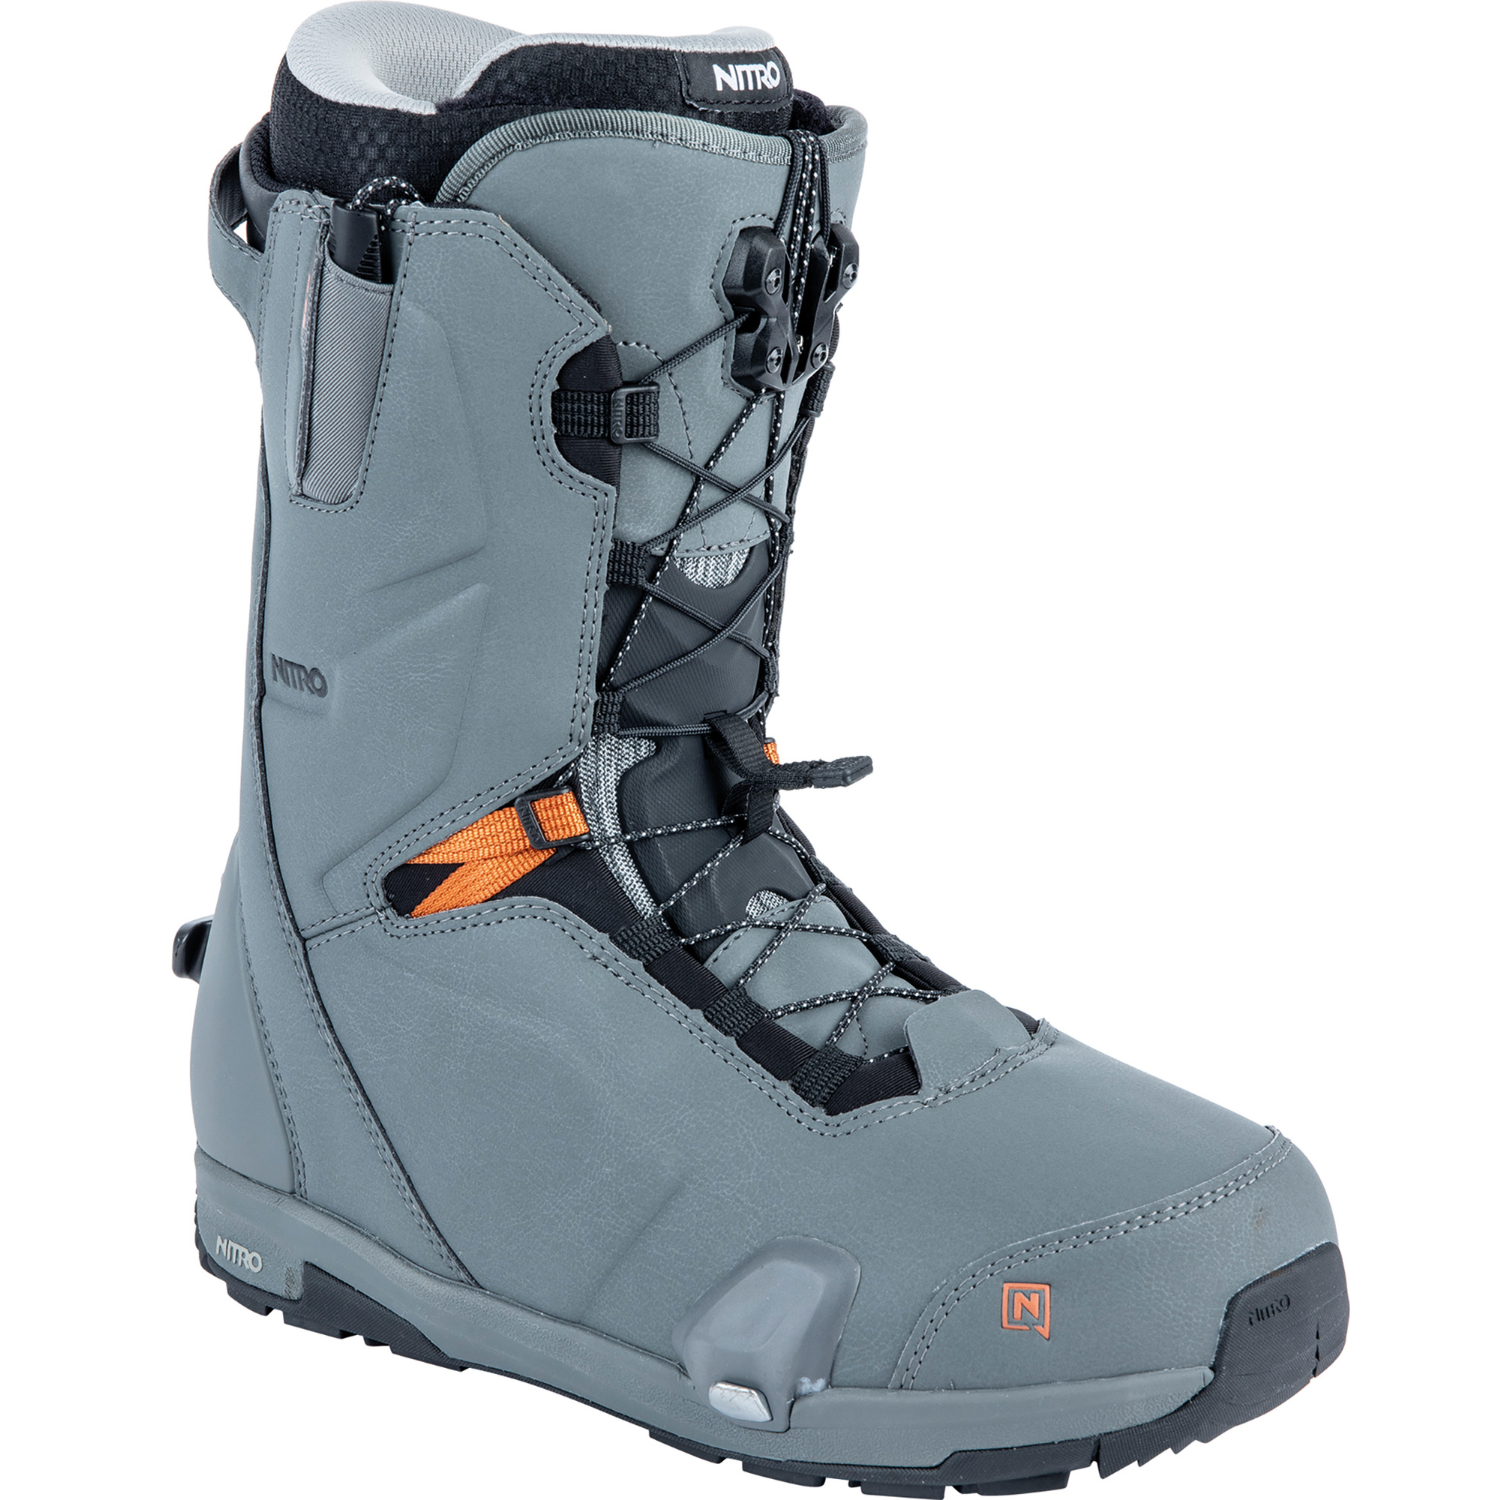 Nitro Profile Step On Snowboard Boots Sale